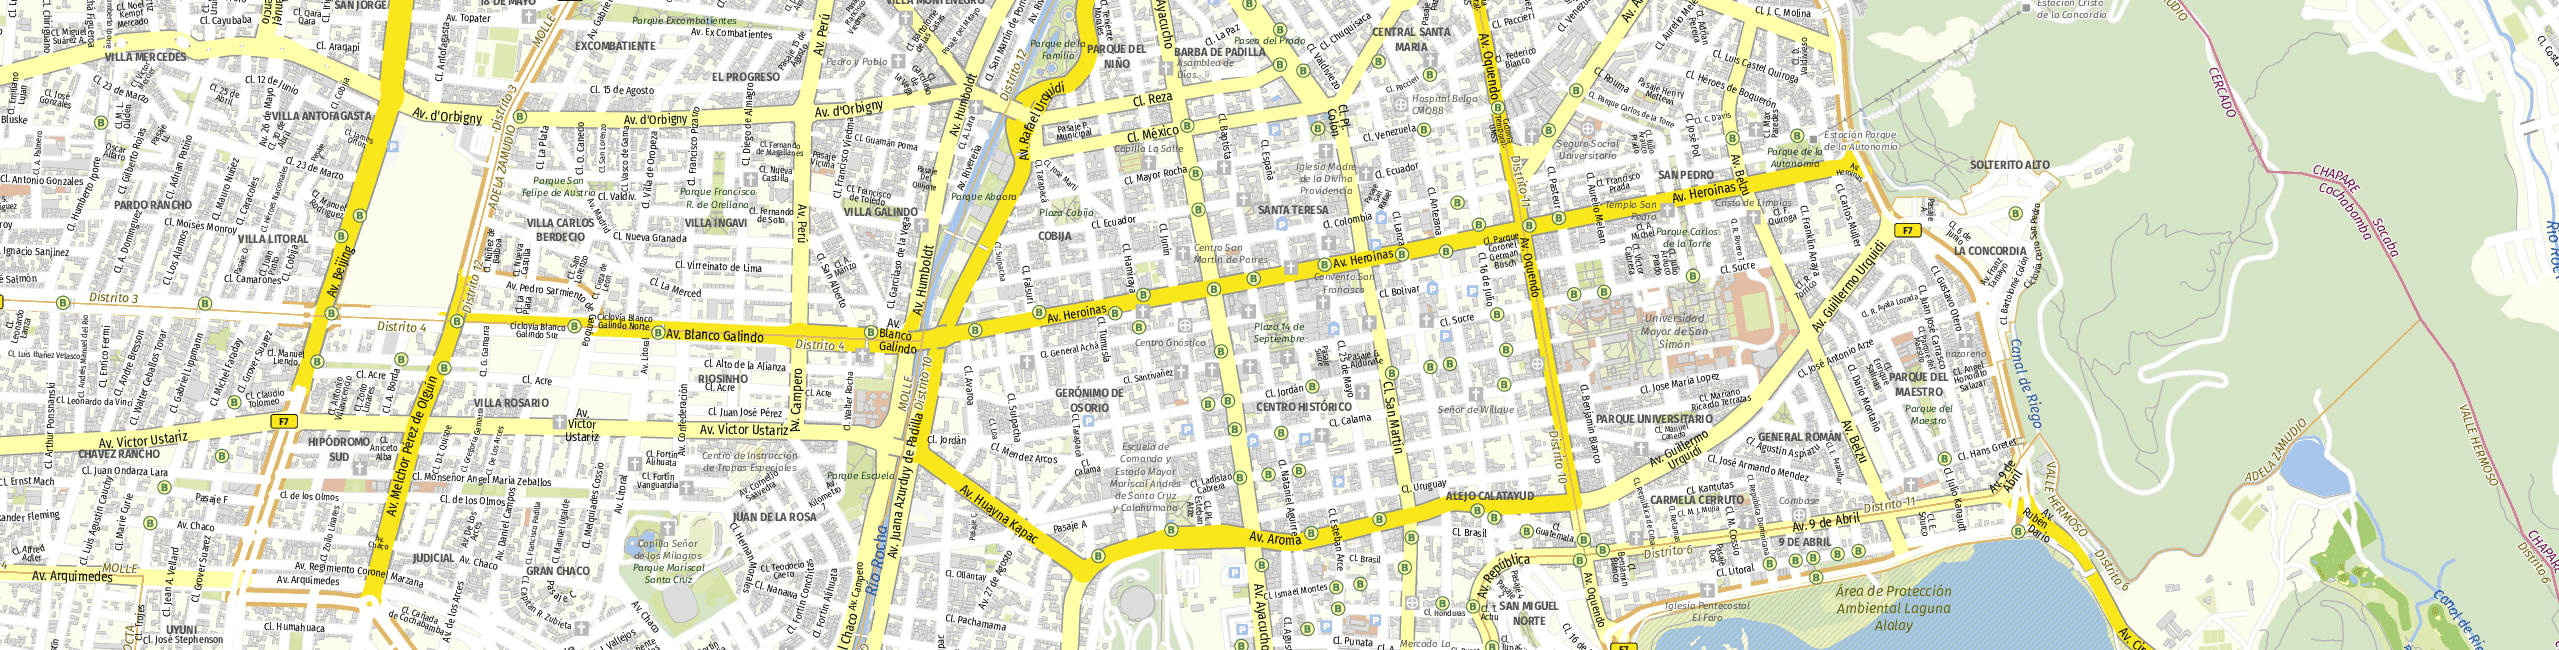 Stadtplan Cochabamba zum Downloaden.